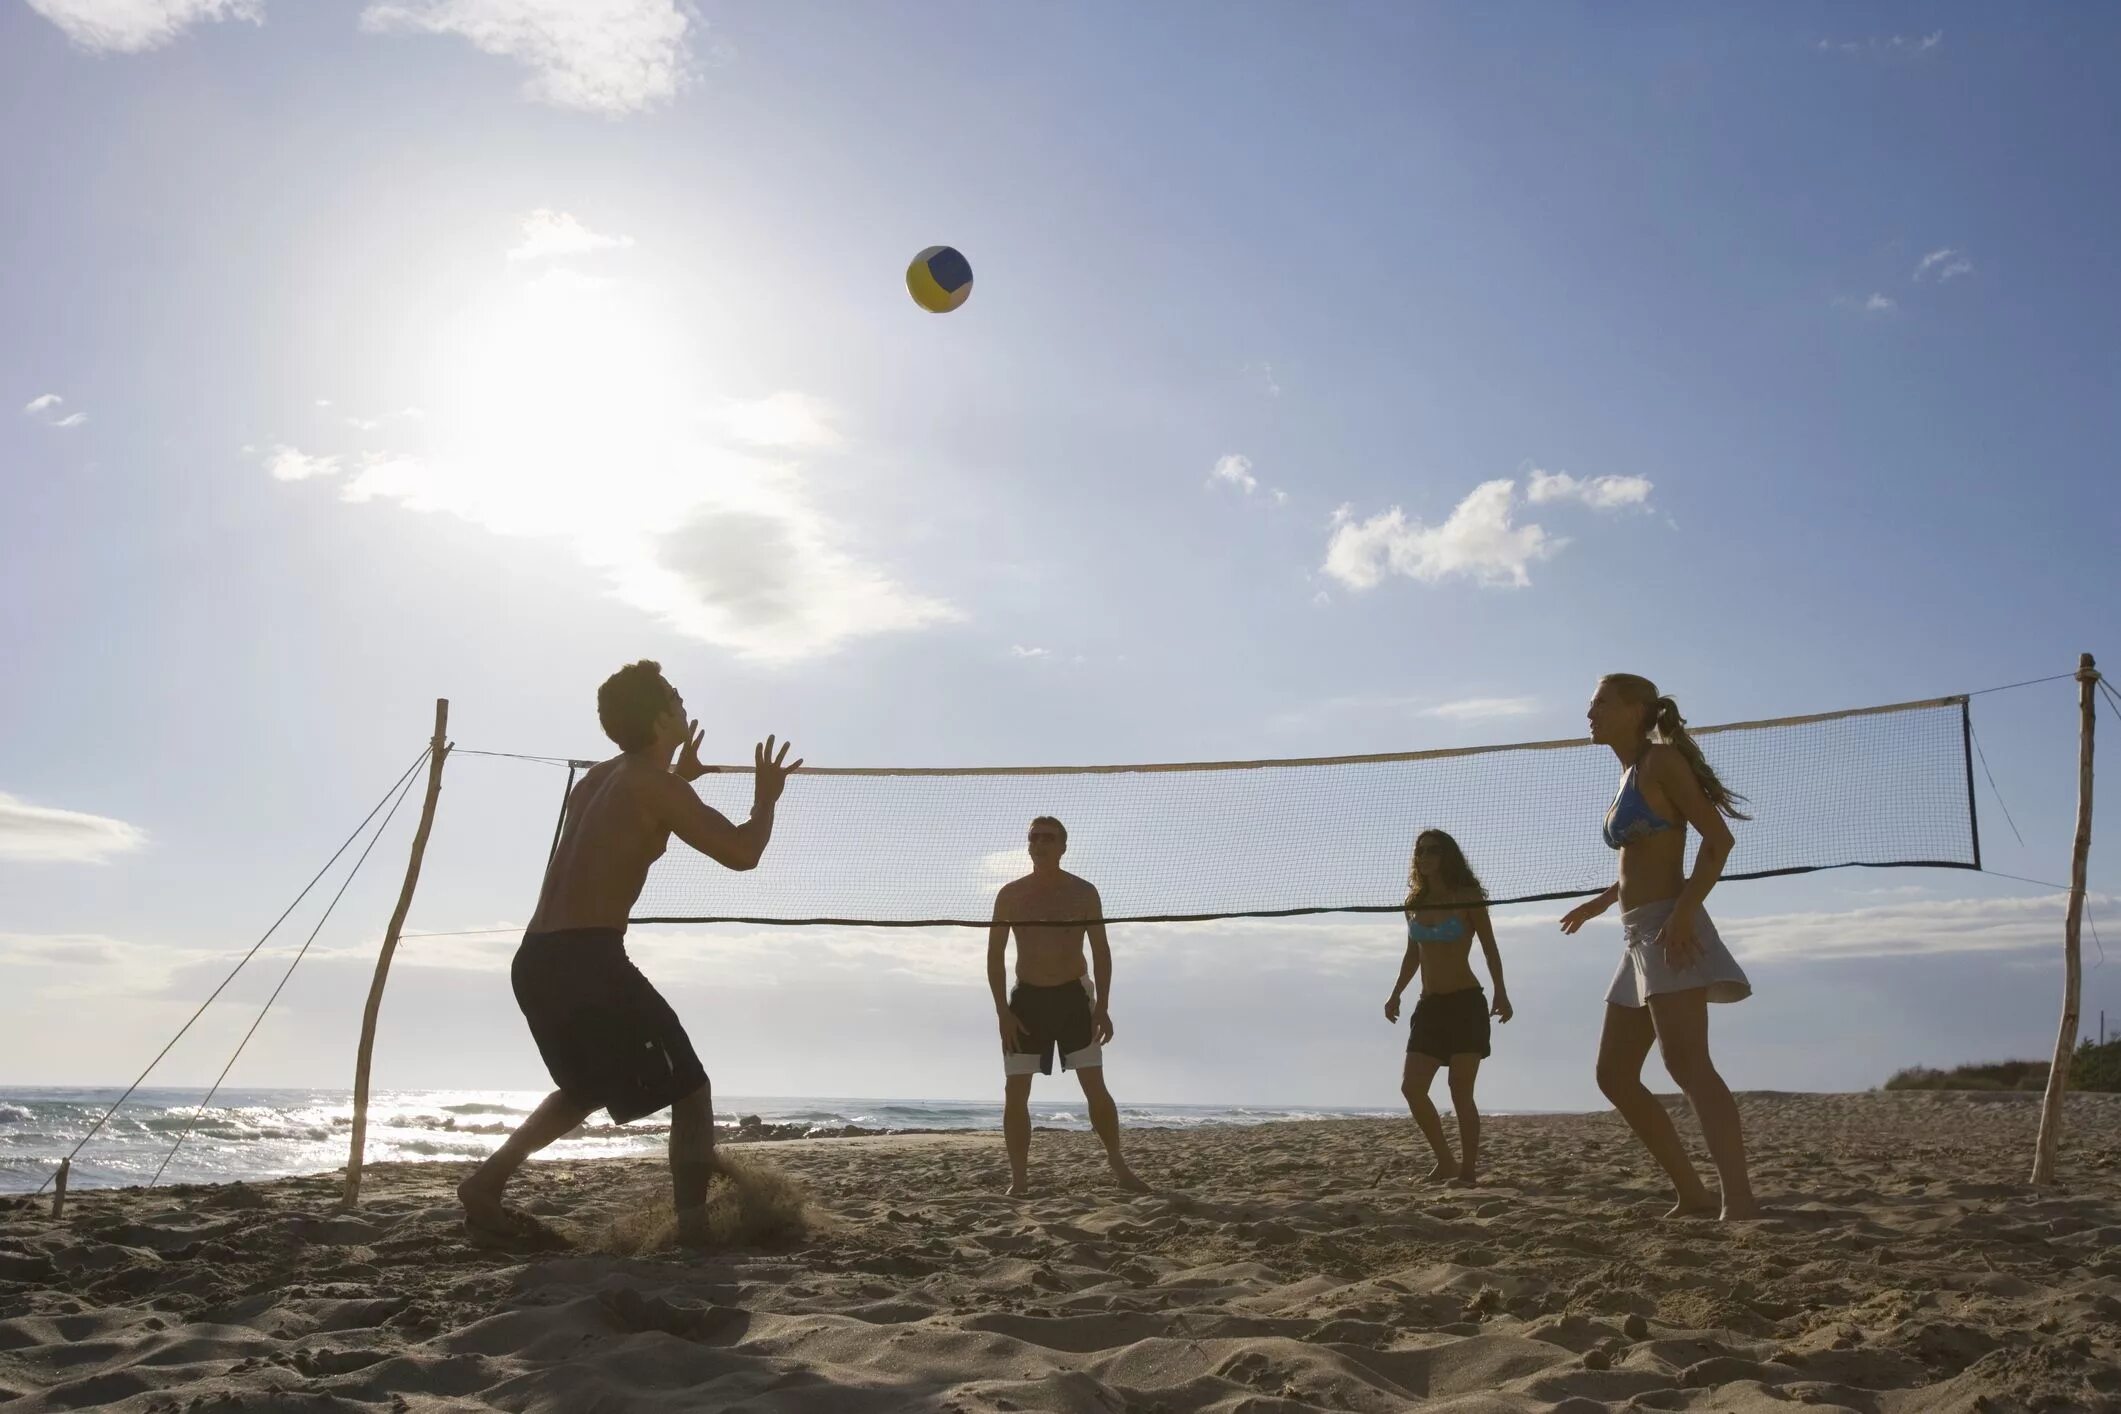 Волейбол на пляже. Игра в волейбол. Детский волейбол на пляже. Игра в волейбол на пляже. Мужчины играли в волейбол